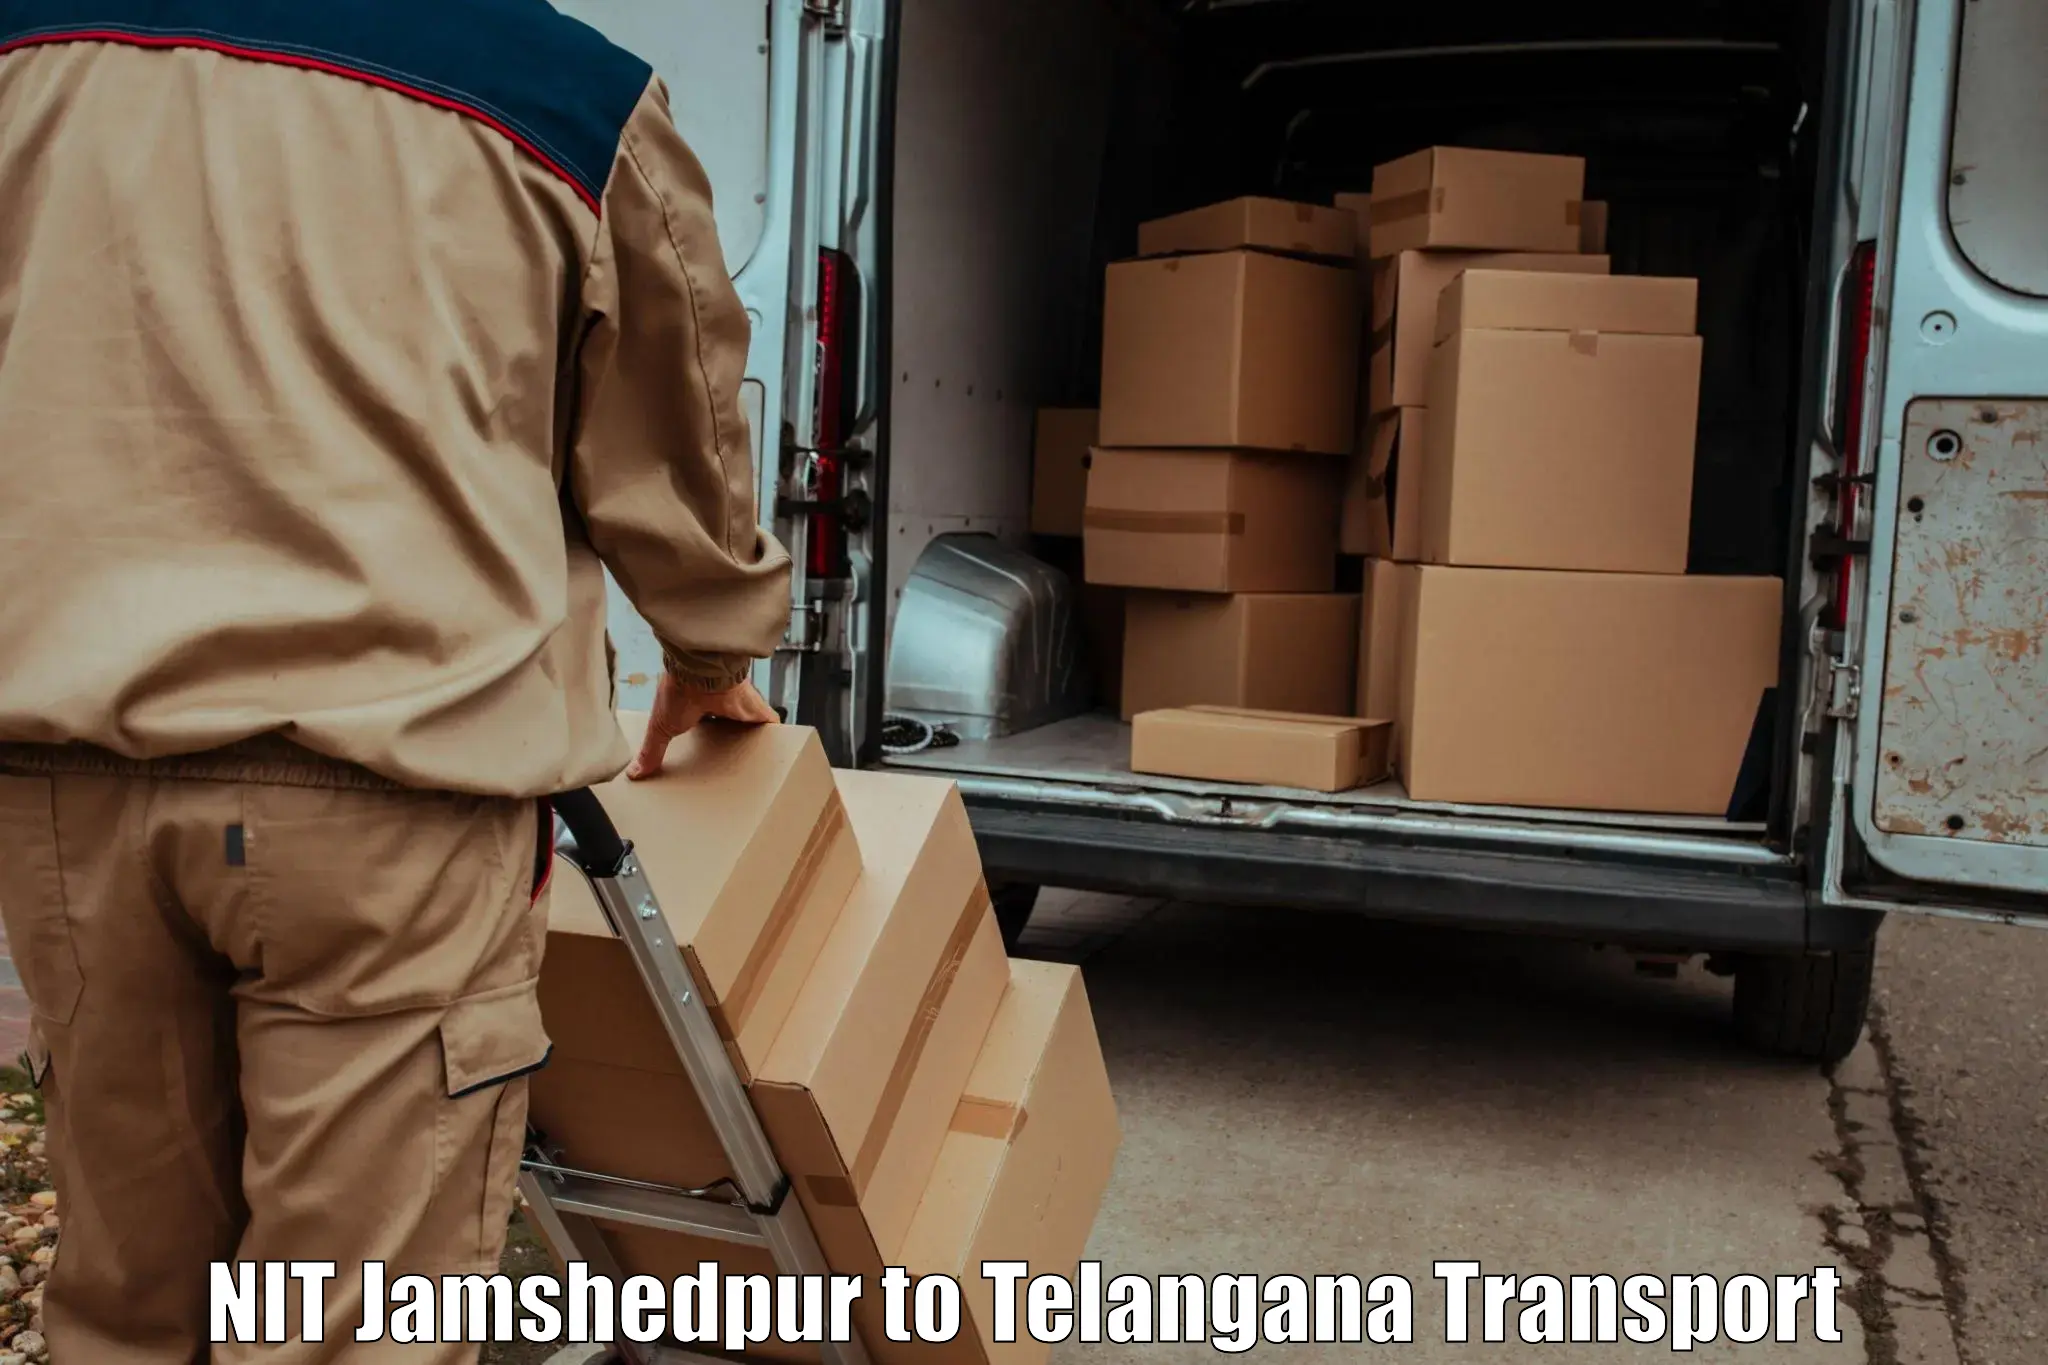 Daily parcel service transport in NIT Jamshedpur to Mudigonda